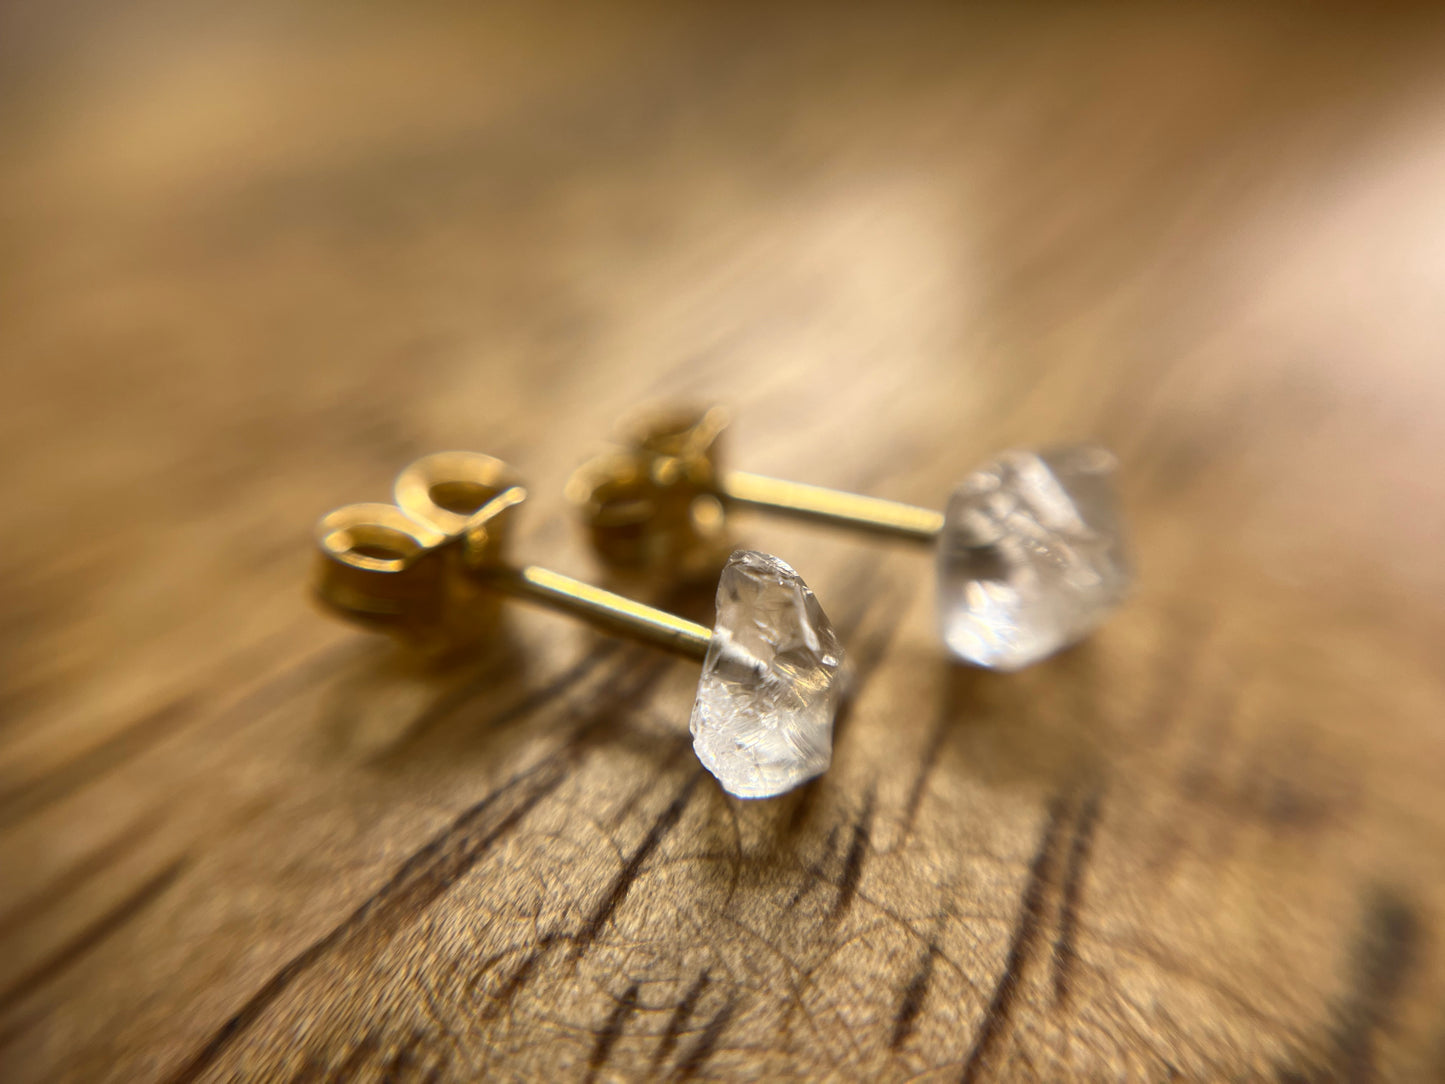 9ct or 18ct Gold Quartz Stud Earrings, Natural Quartz Earrings, Raw Crystal Earrings, Raw Quartz Jewellery, Minimalist Earring Studs